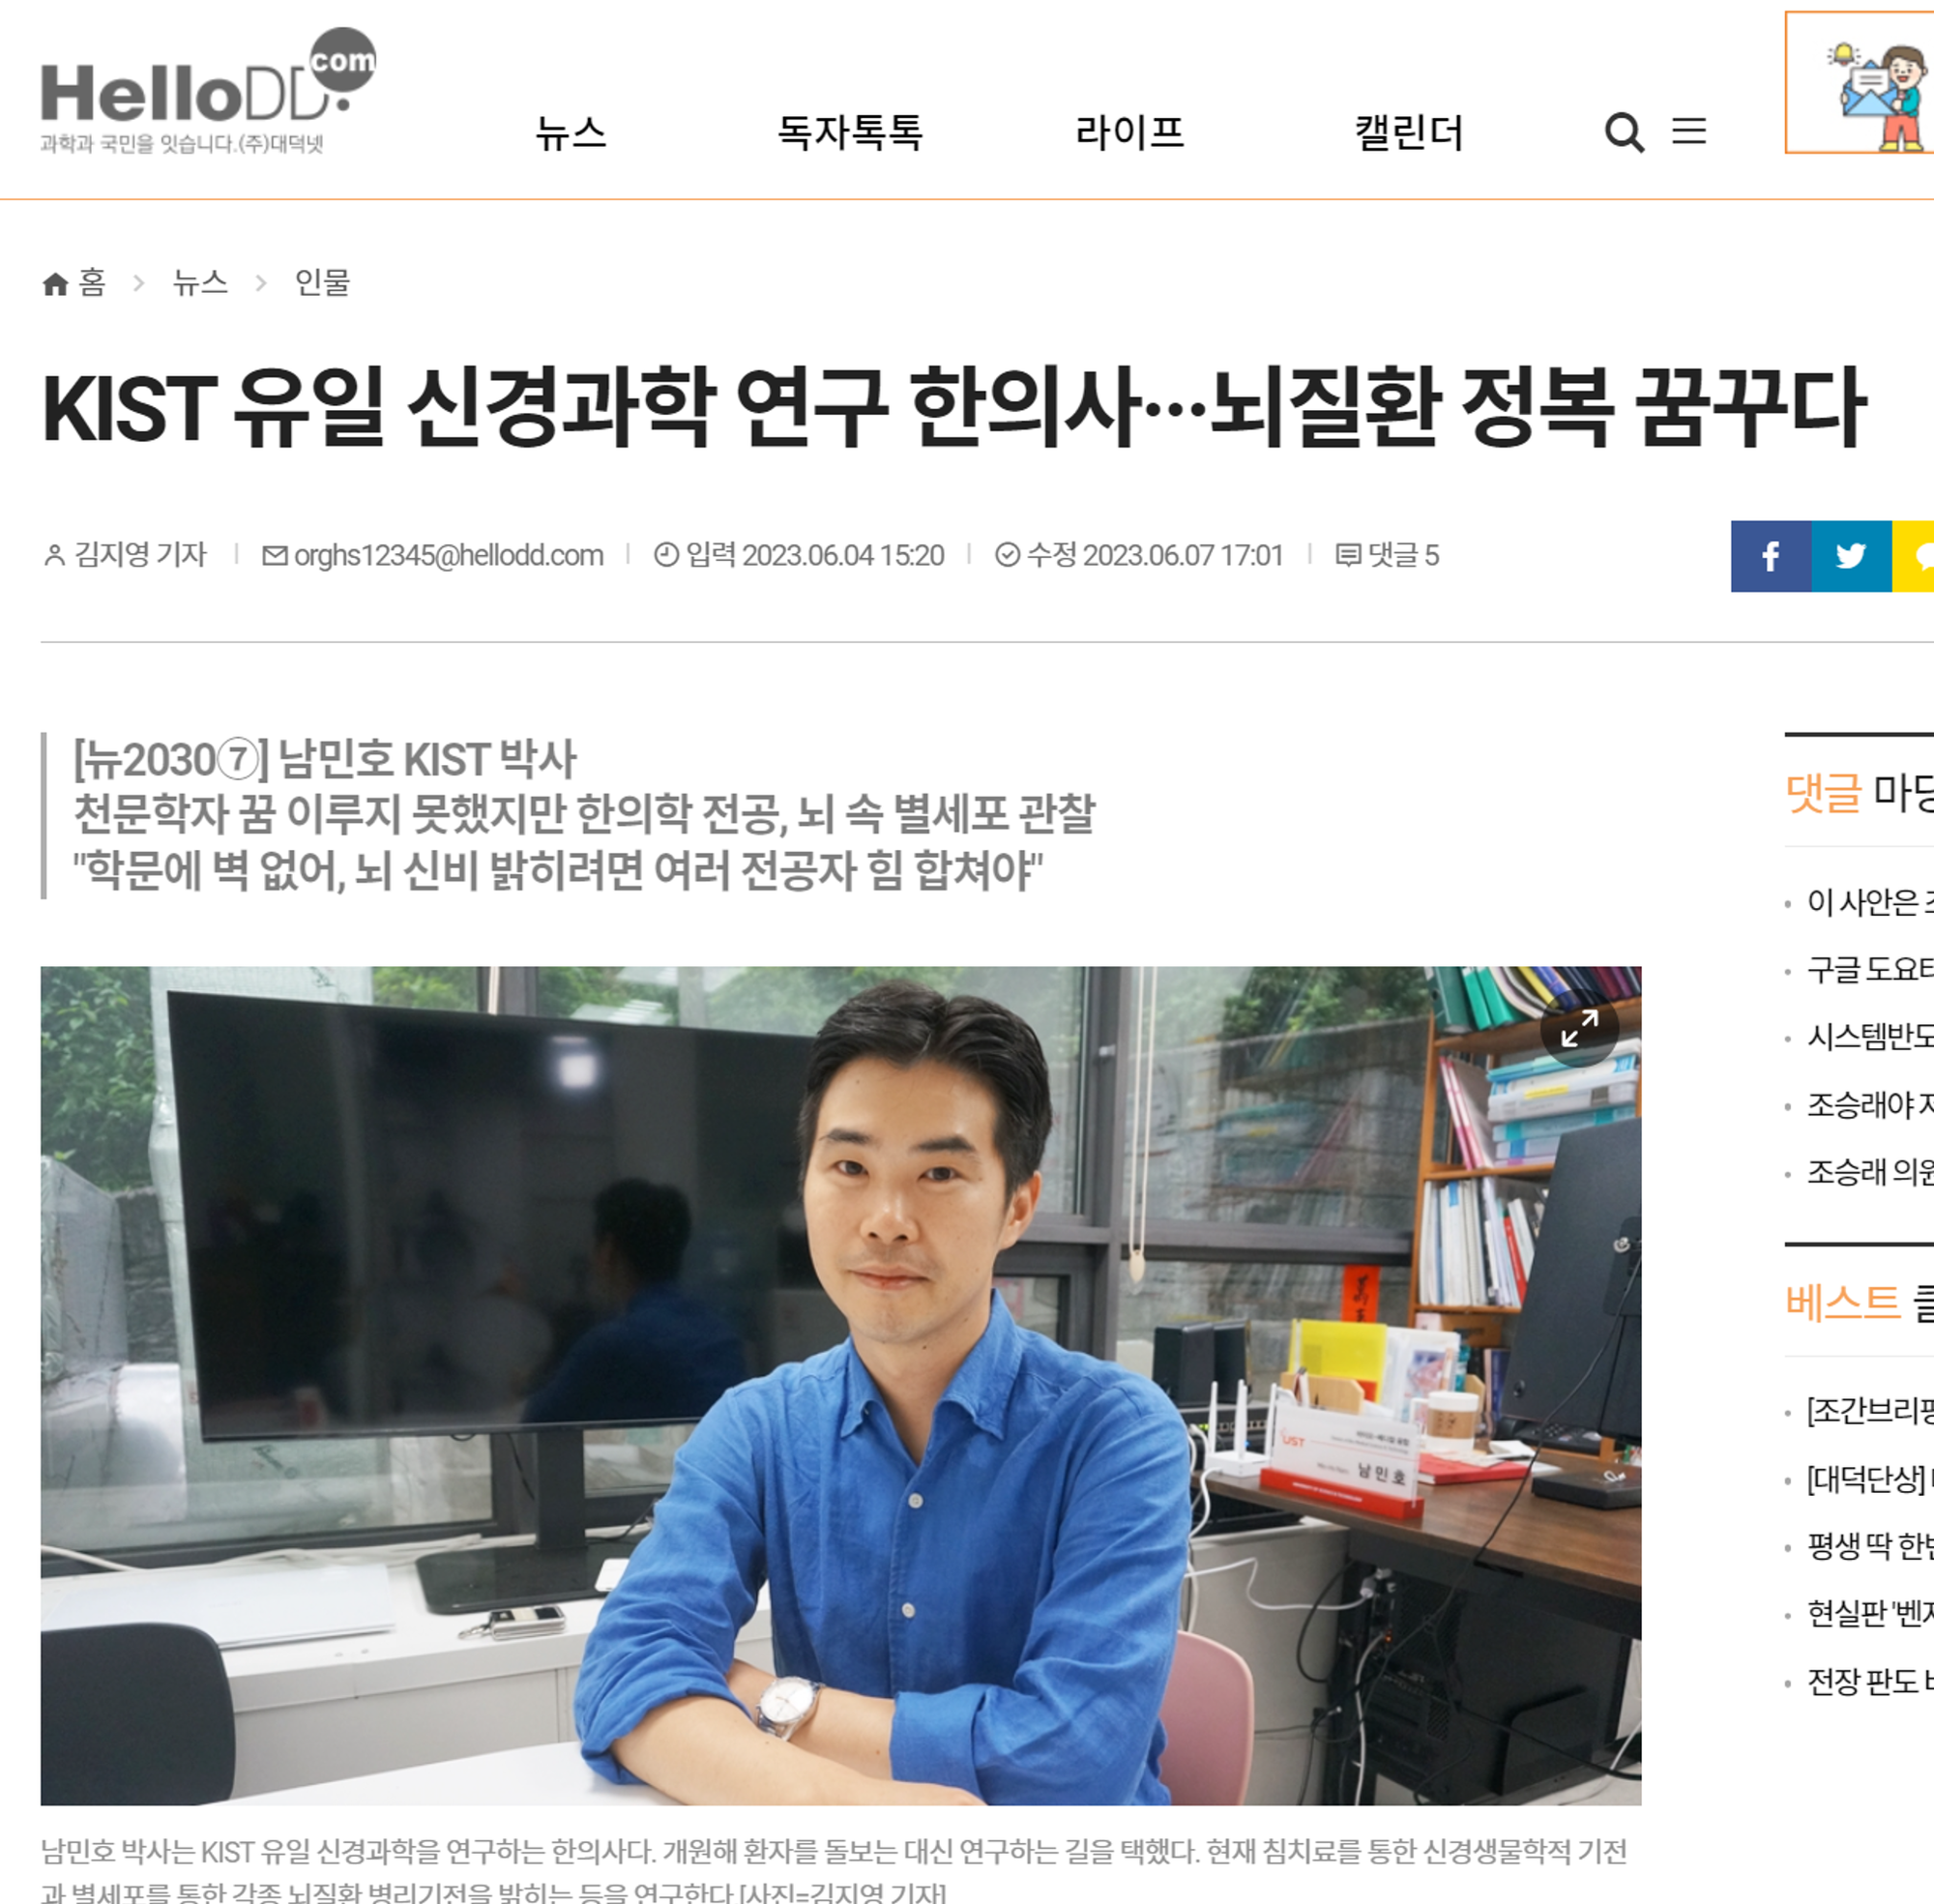 Dr. Nam is introduced in HelloDD - KIST 유일 신경과학 연구 한의사···뇌질환 정복 꿈꾸다